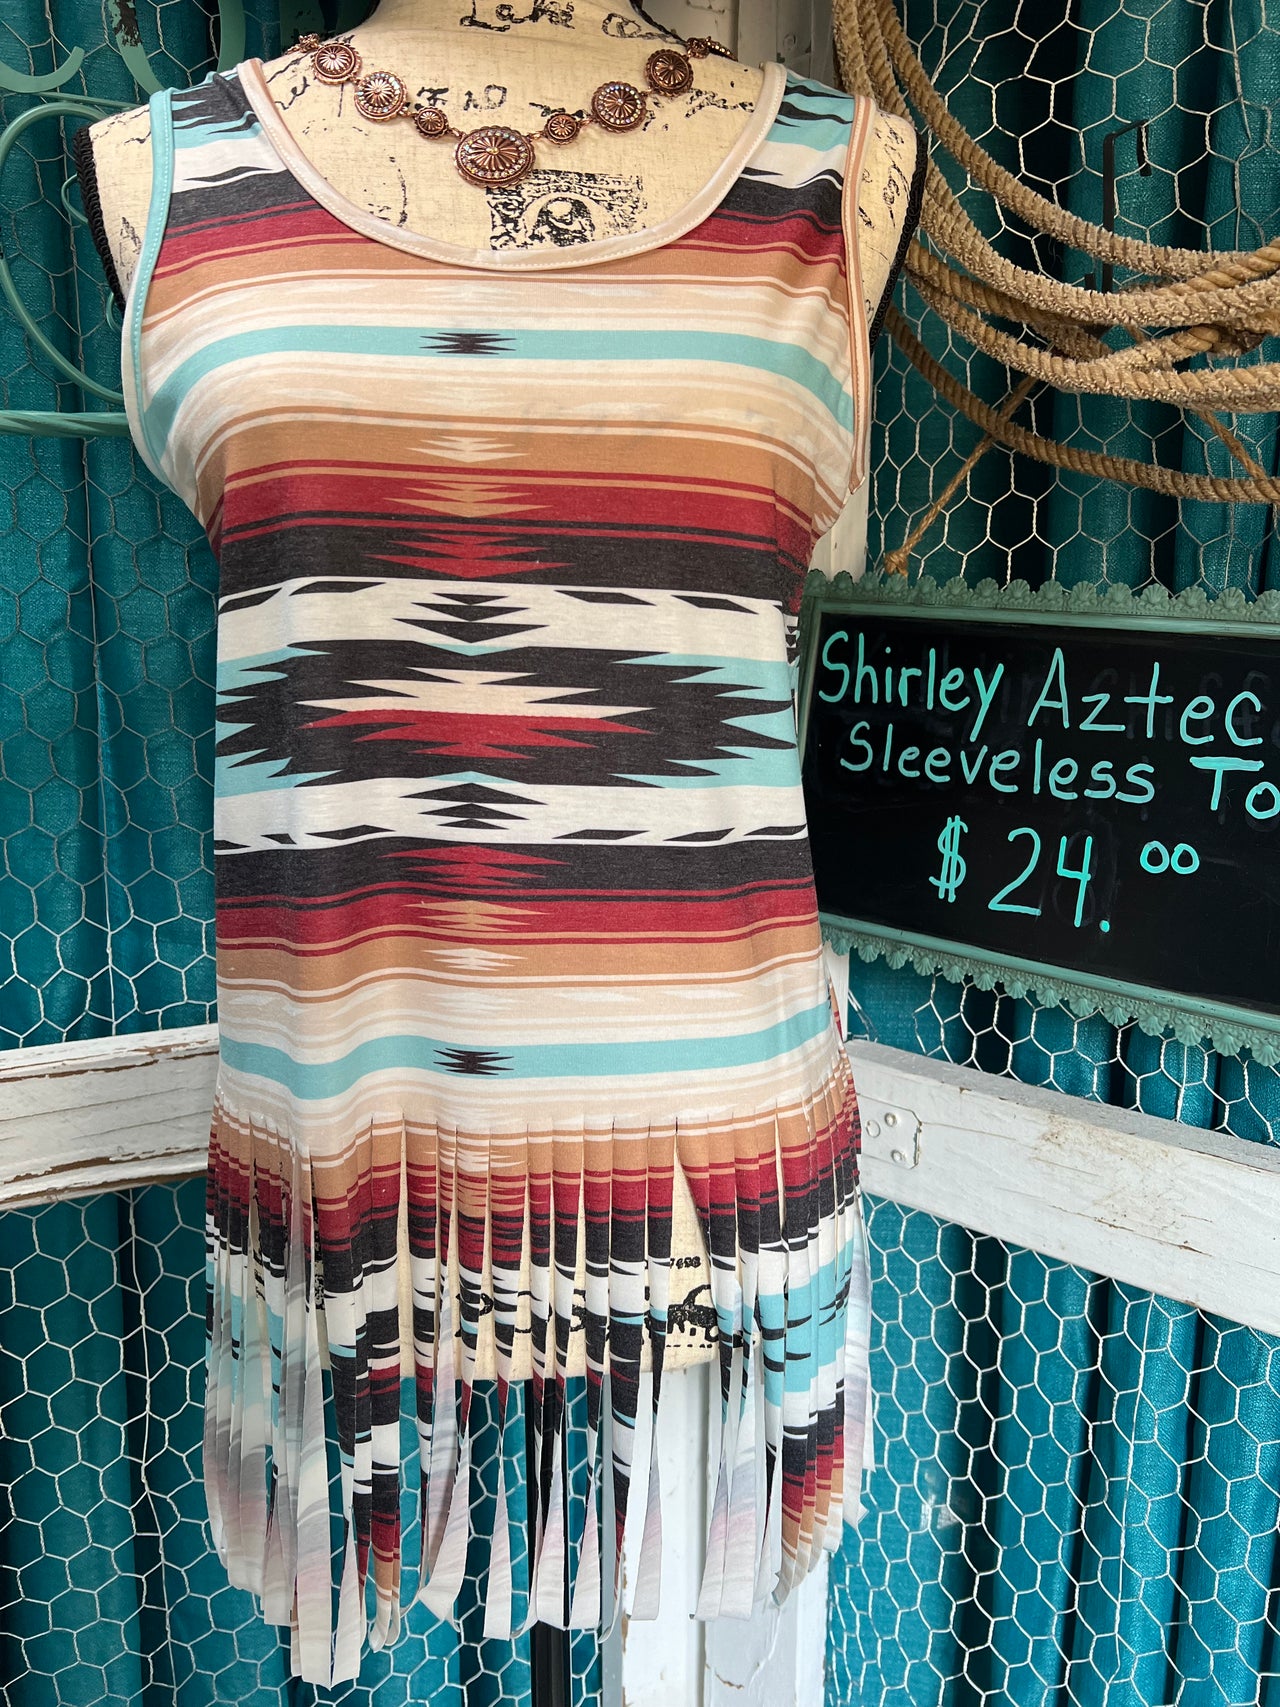 Shirley Aztec Sleeveless Top